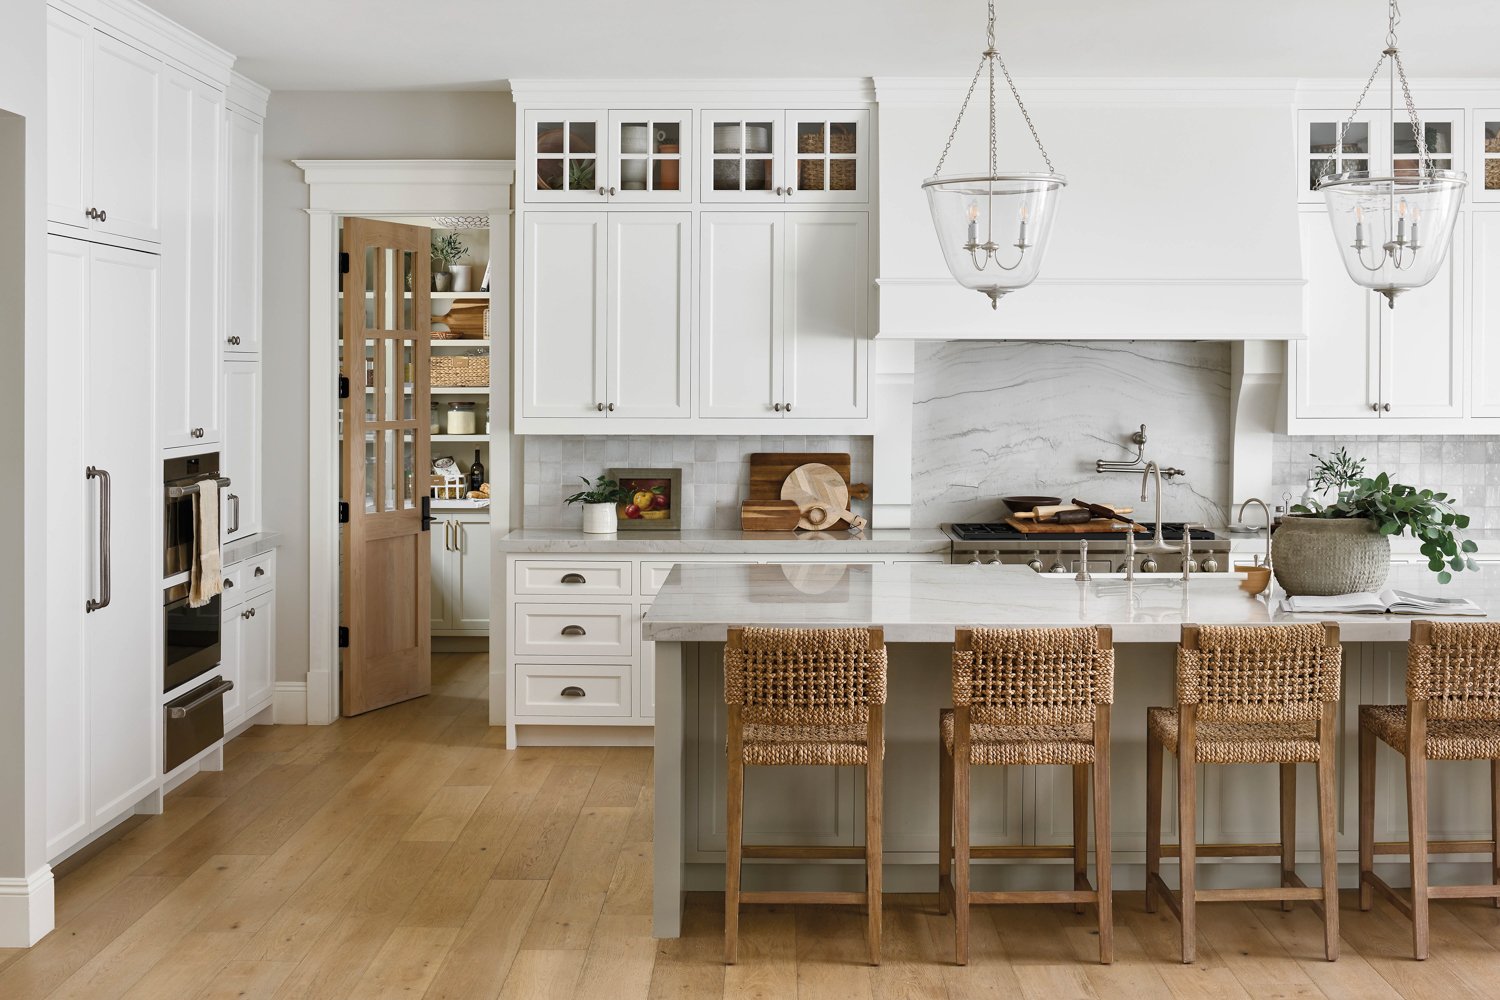 All-white kitchen with quartzite counters,...